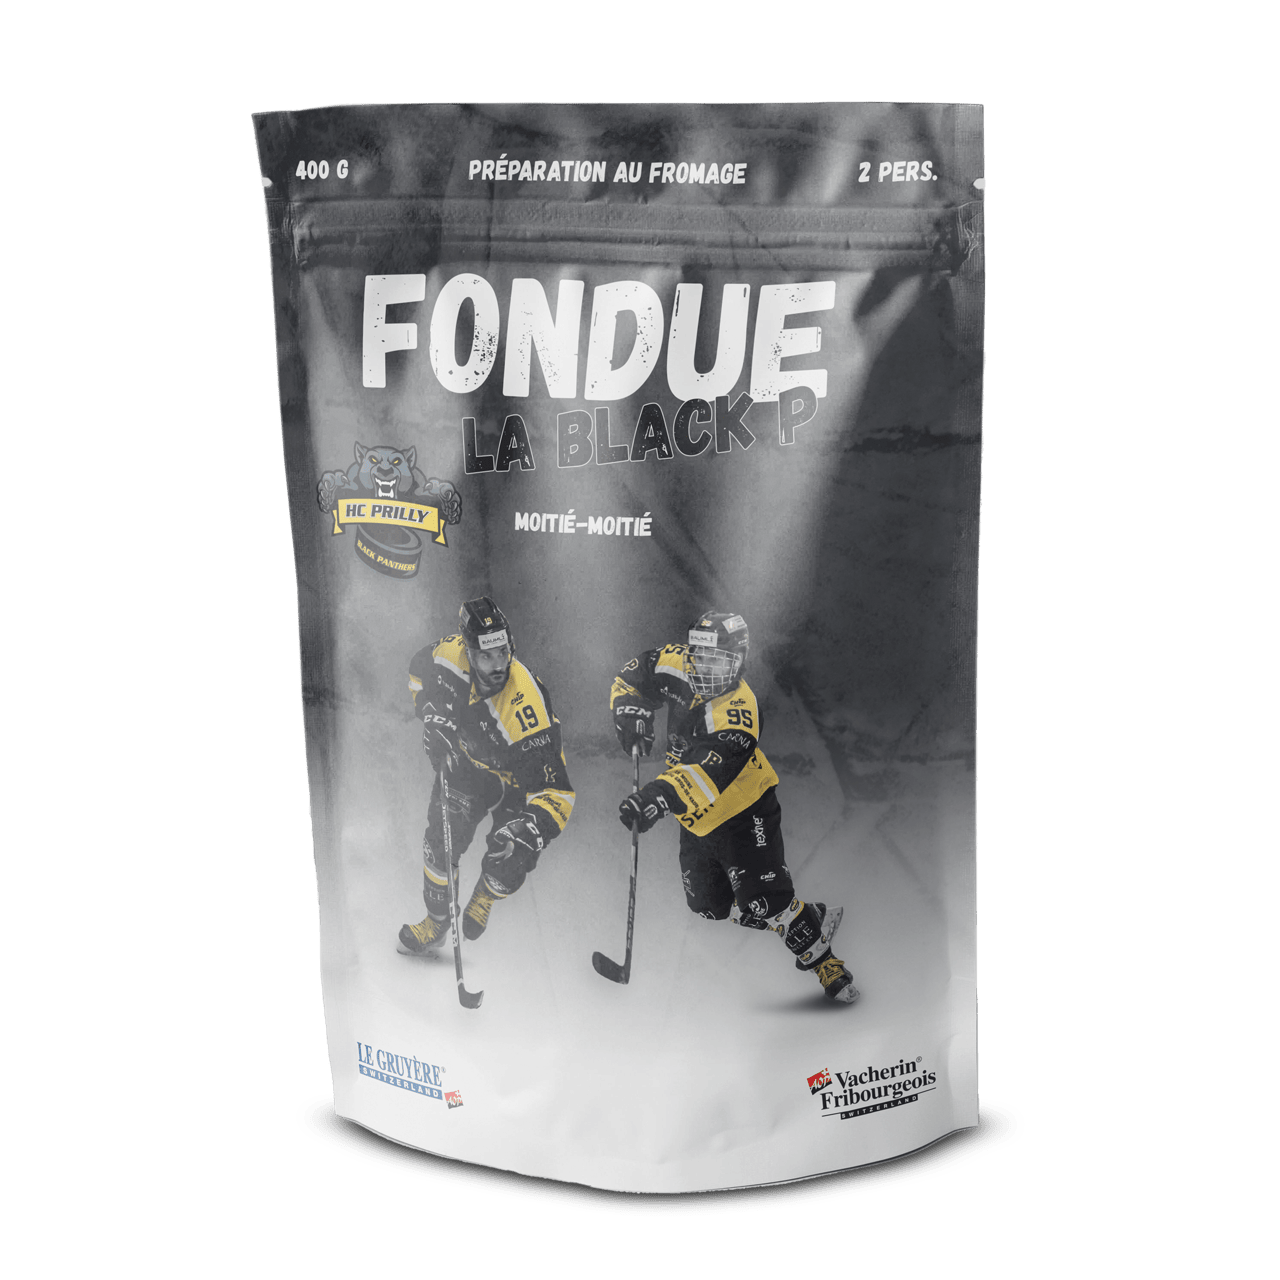 Fondue HC Prilly | 400g